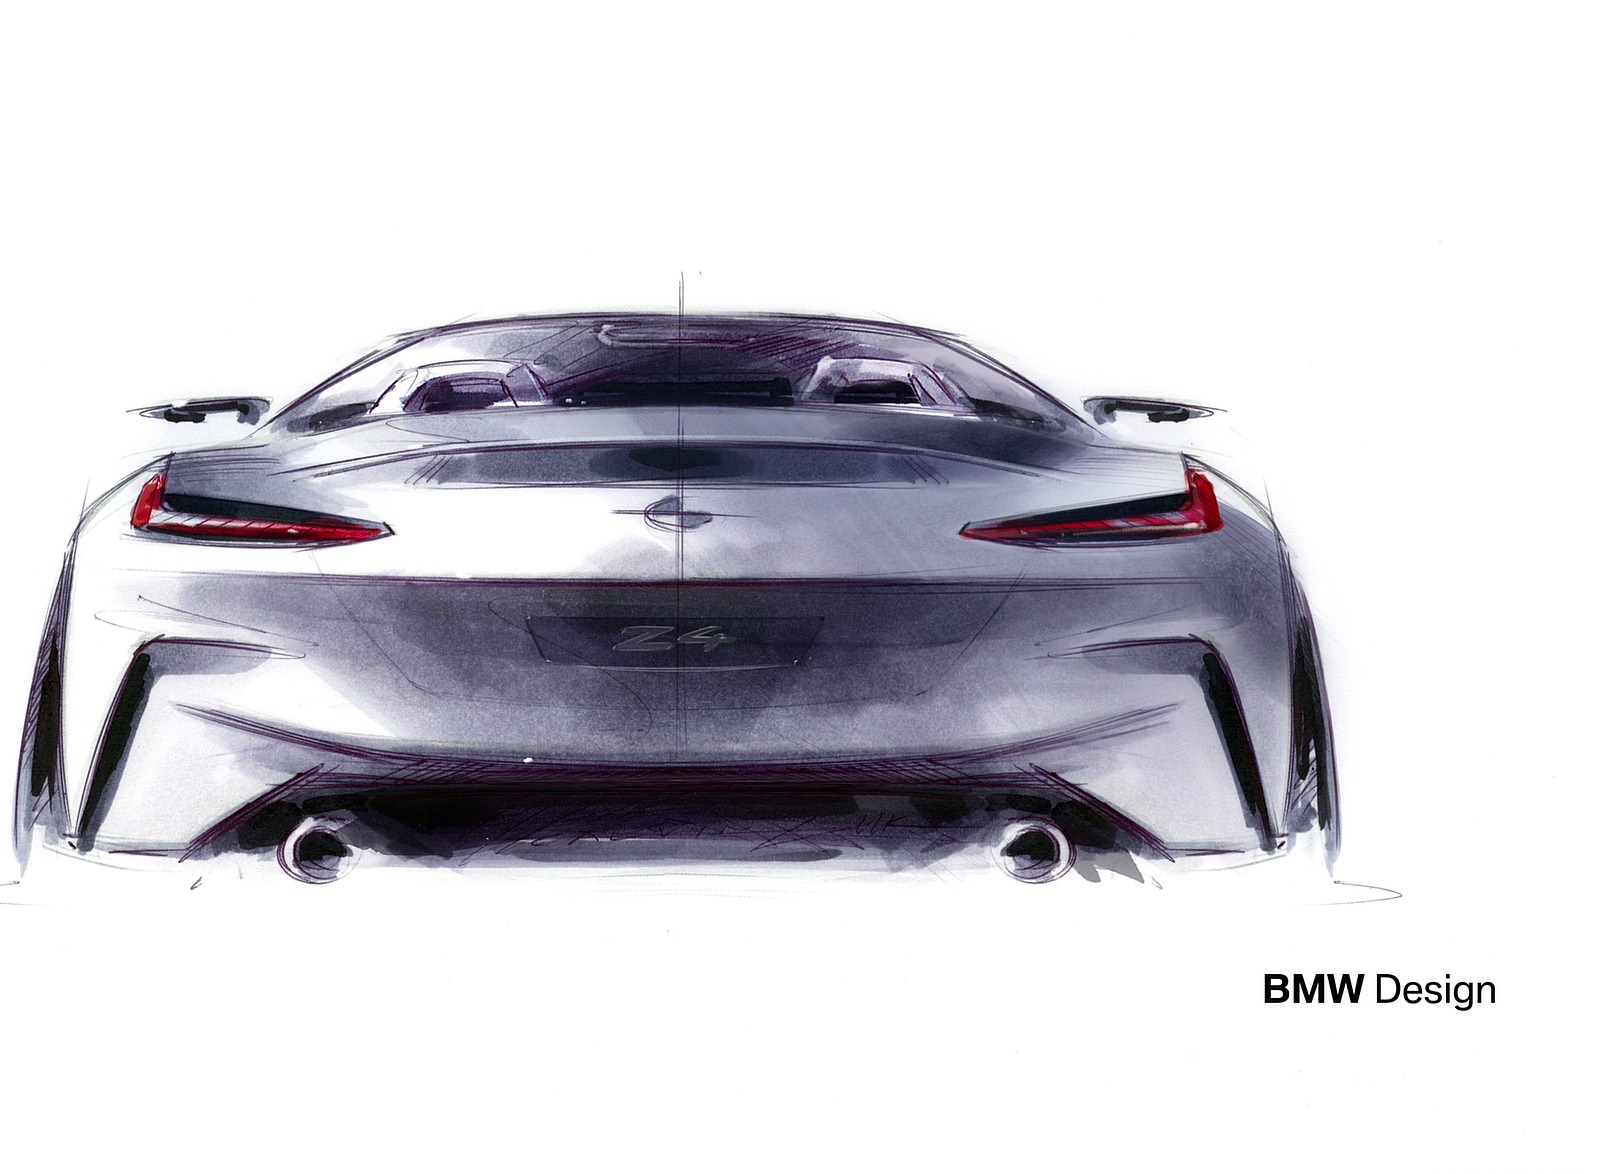 2019 BMW Z4 M40i Design Sketch Wallpapers #87 of 87